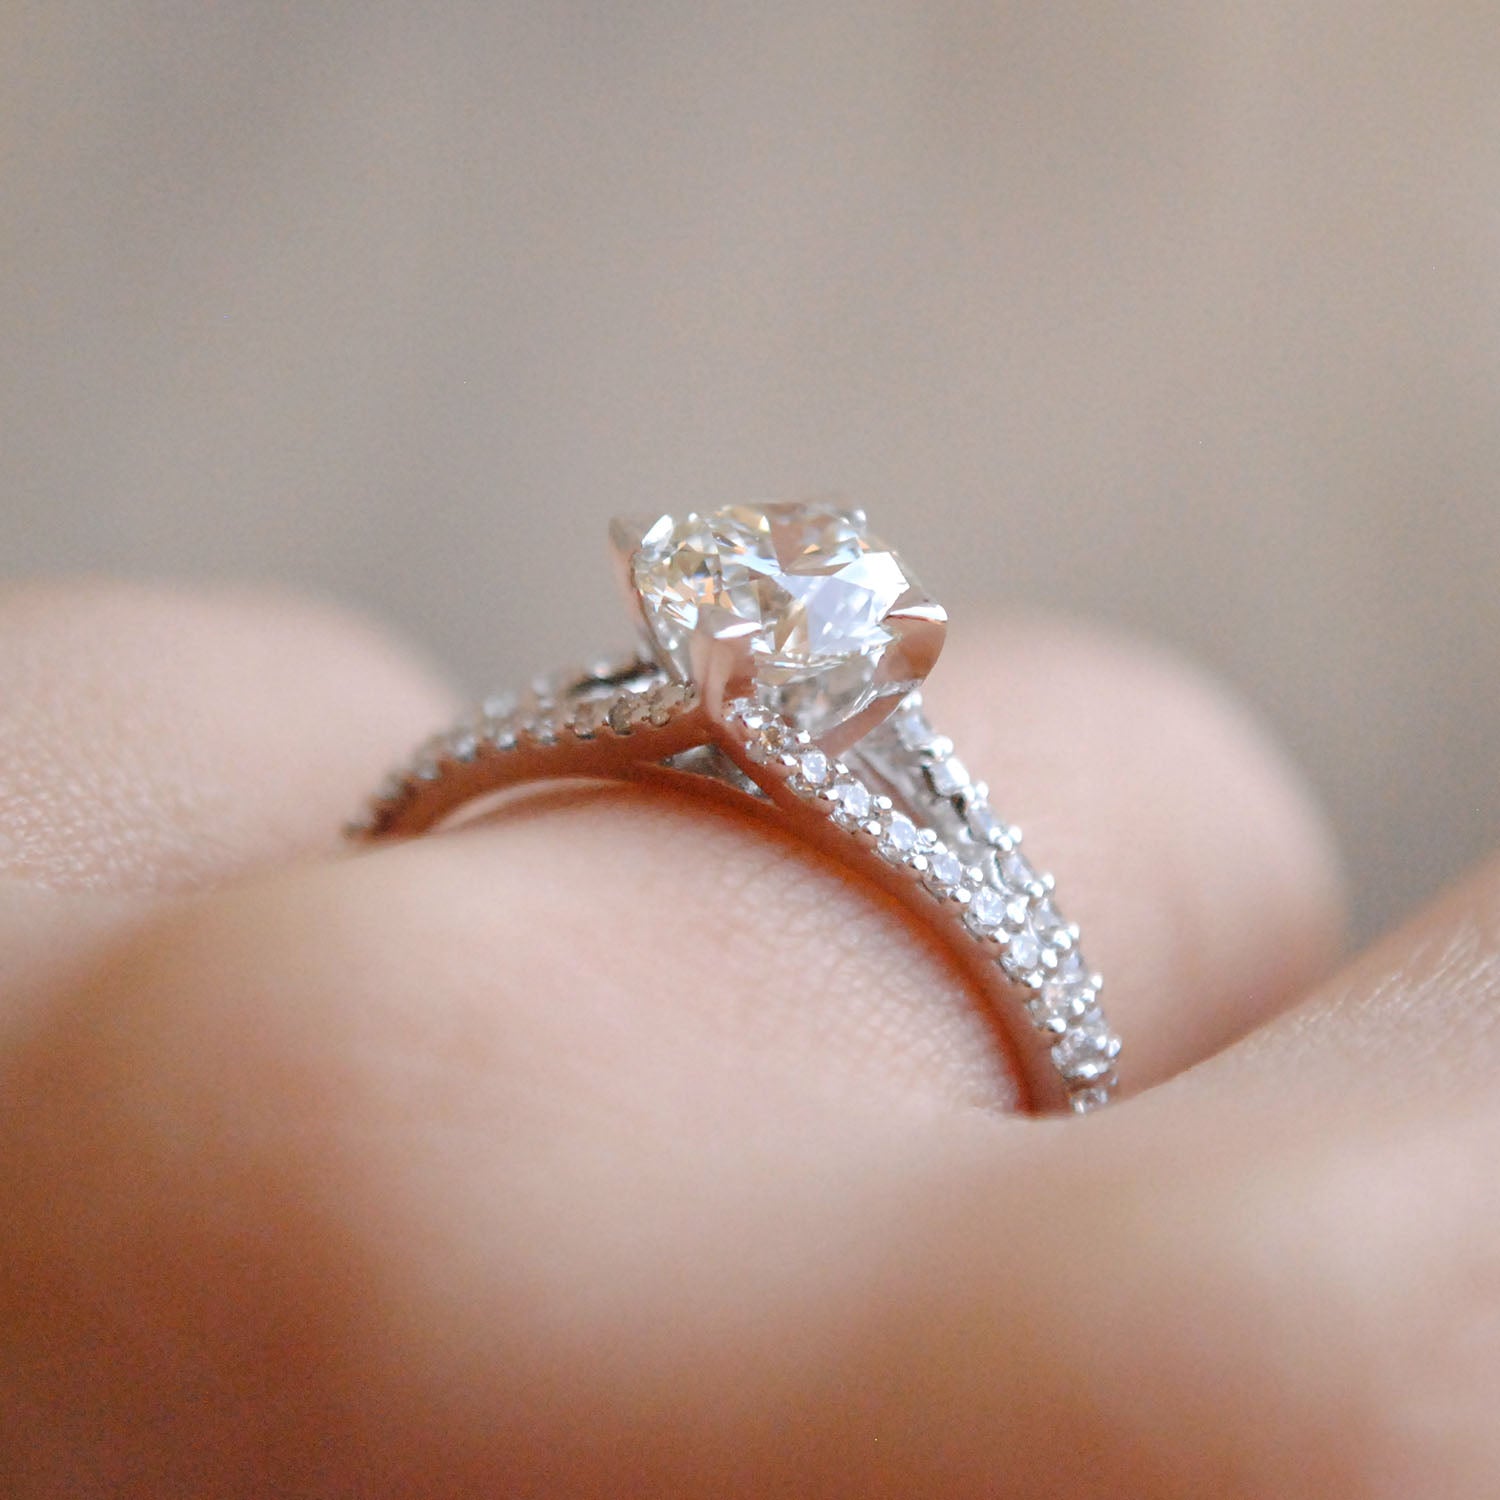 Solitaire Engagement Rings - Diamond, Gold & More | Shop Online